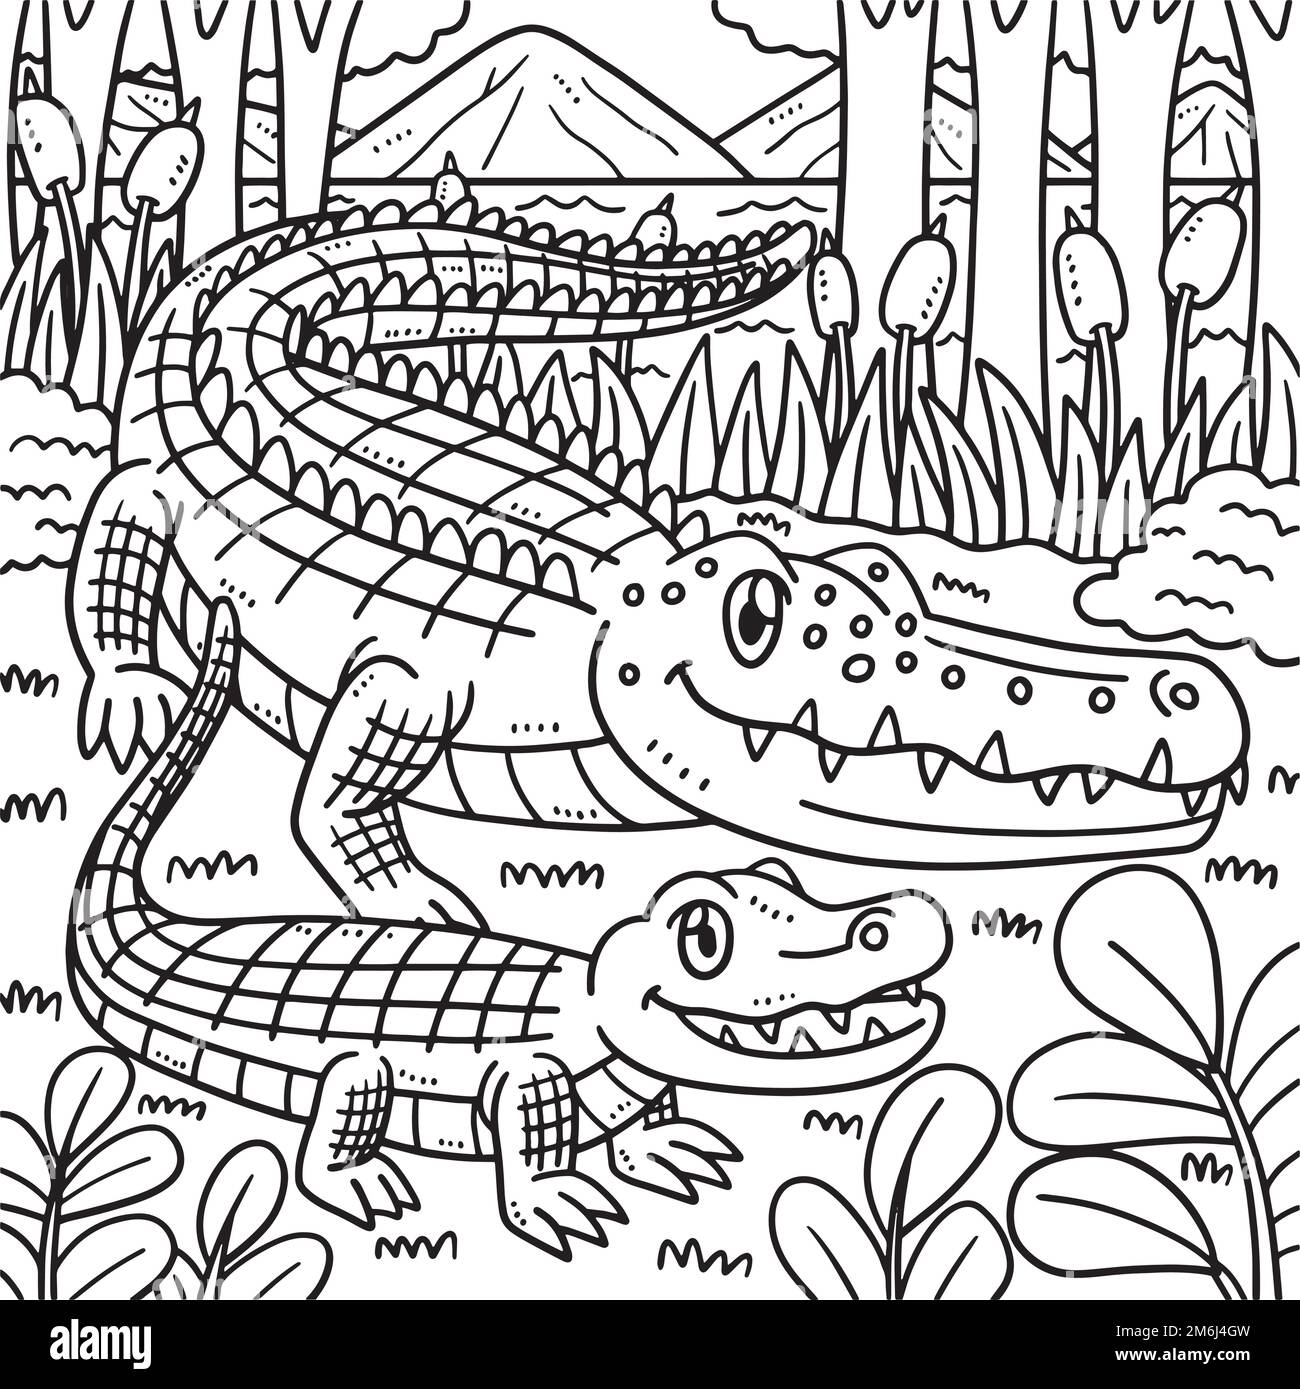 Baby crocodile illustration hi